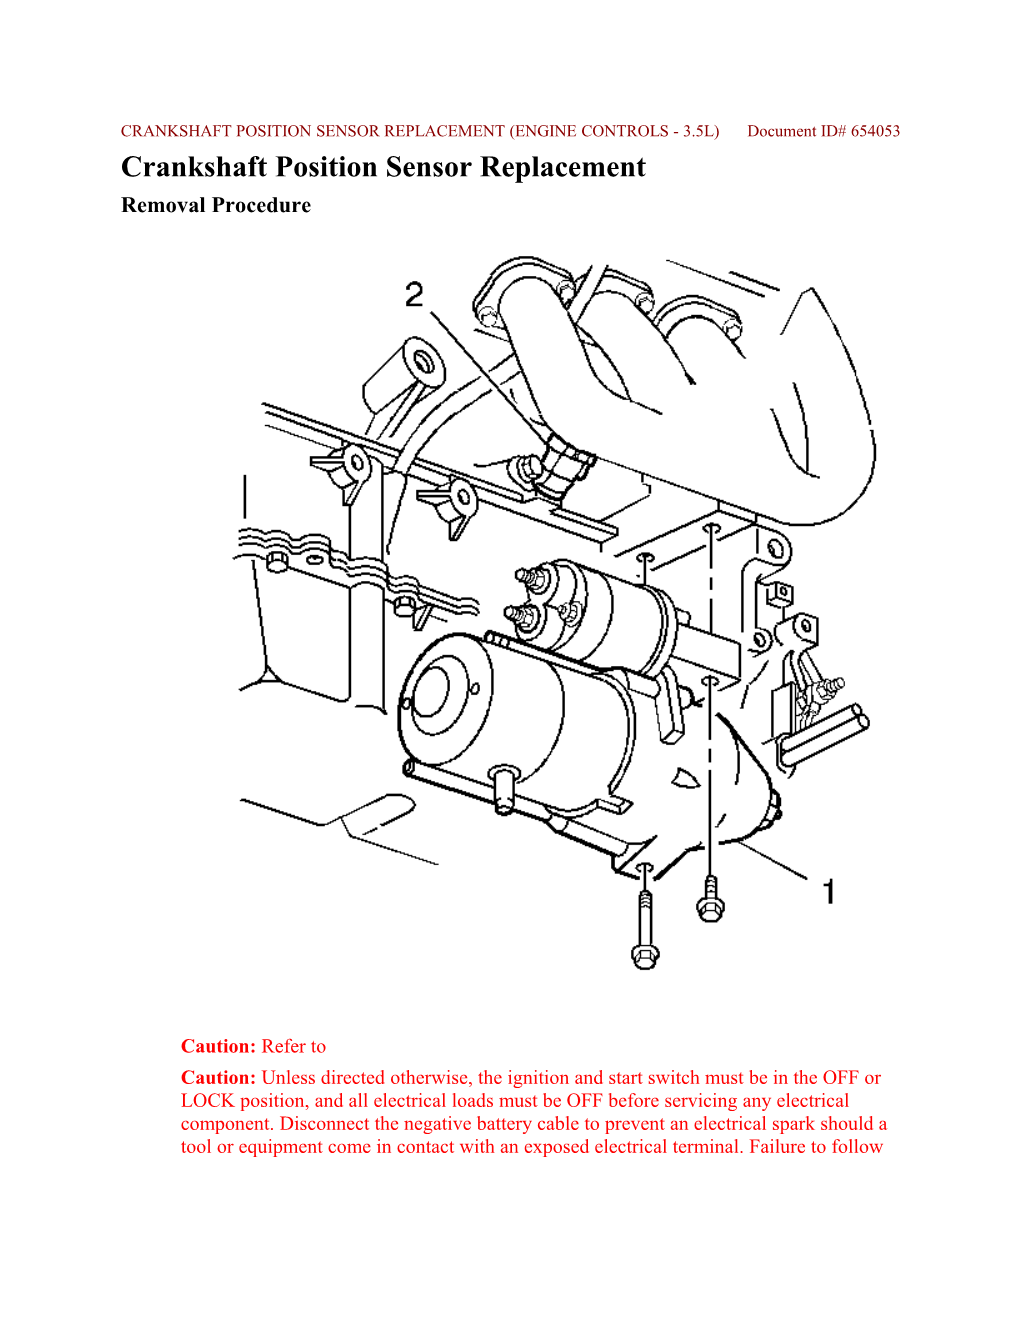 Crankshaft Position Sensor Replacement